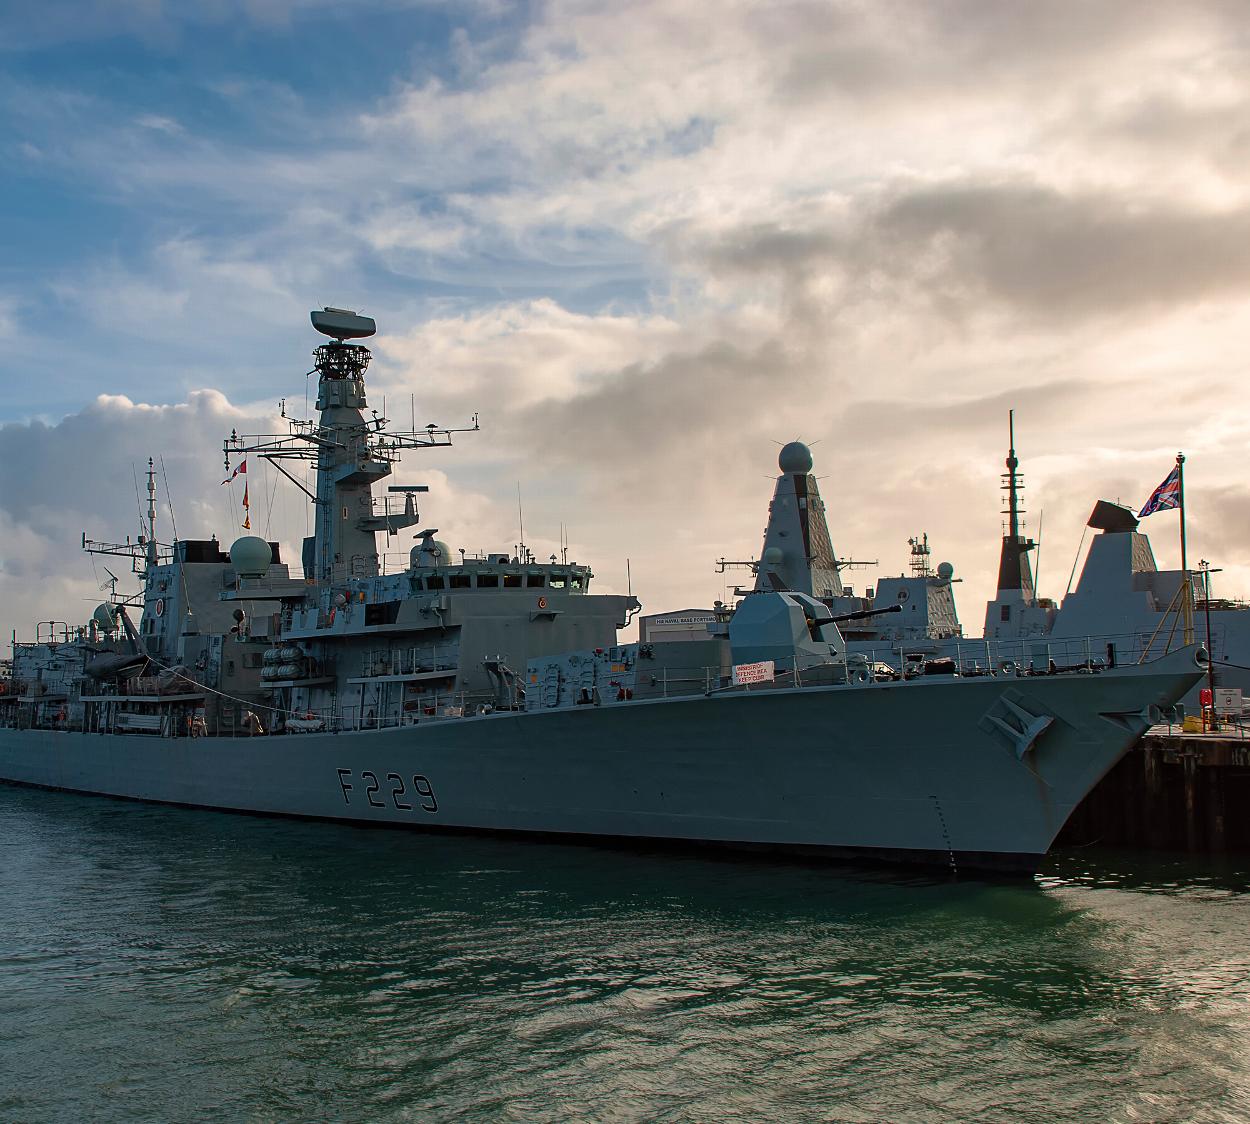 Modern British navy ship